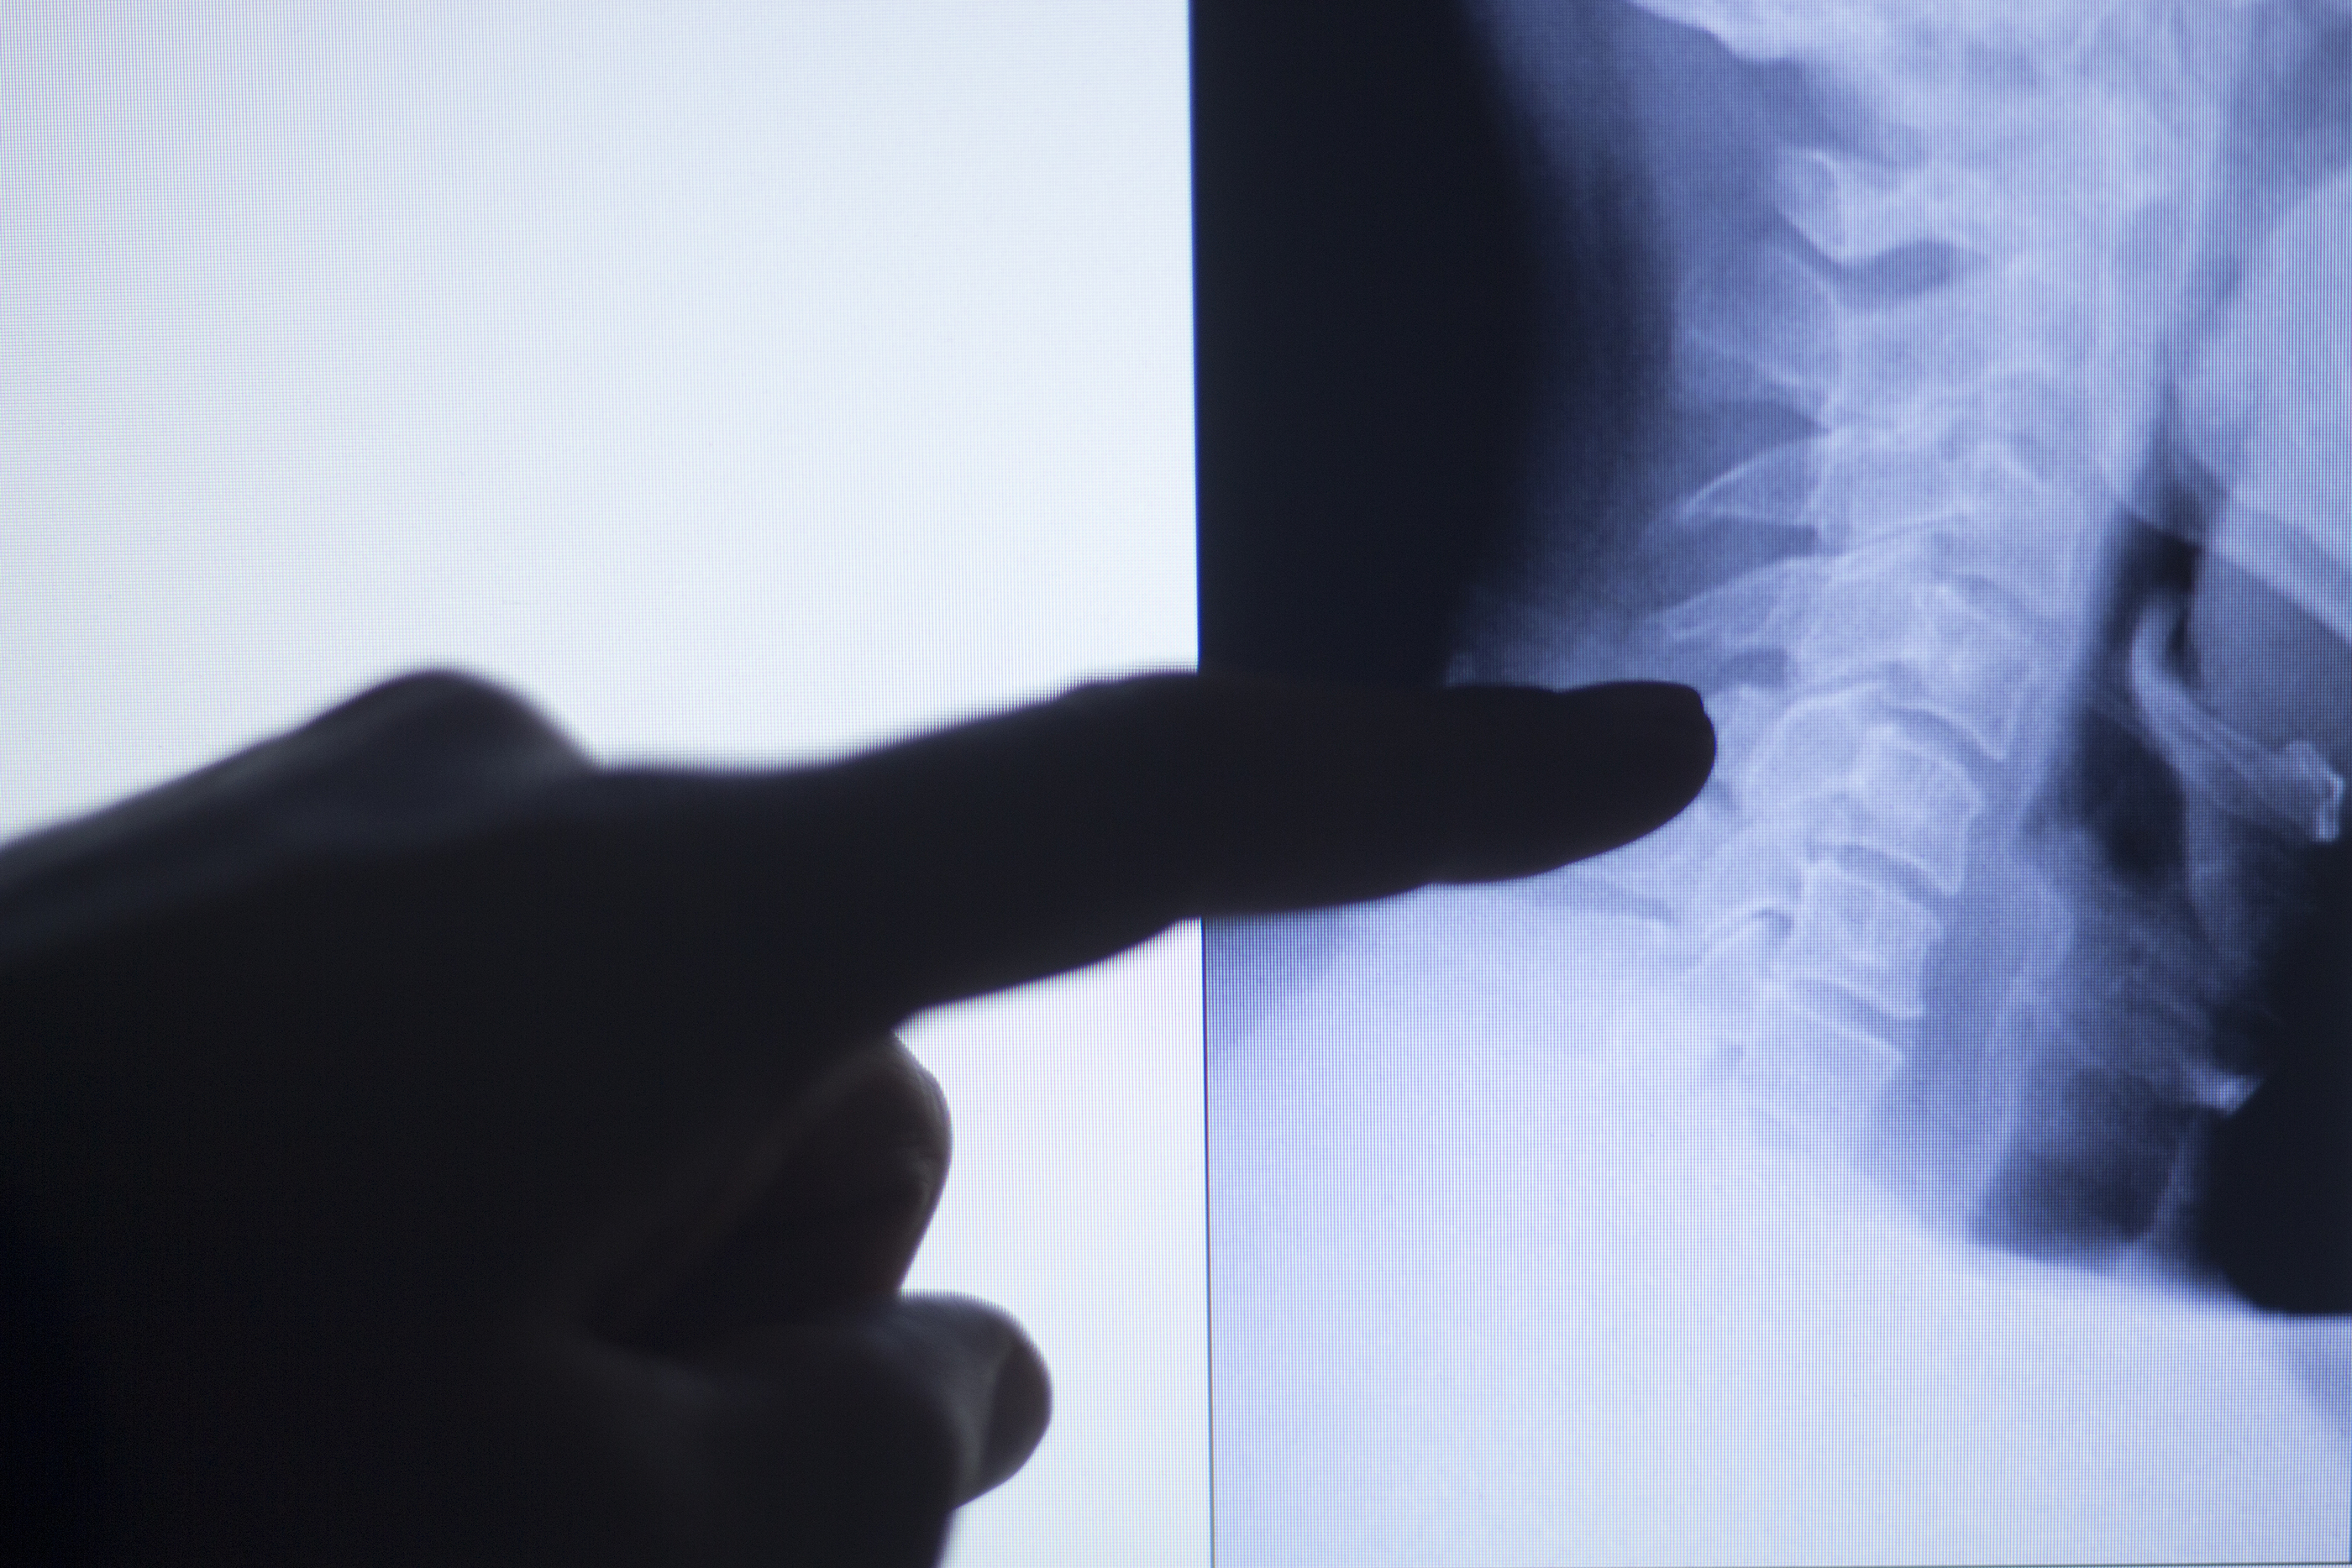 Spinal Cord Injury of BMX Olympian